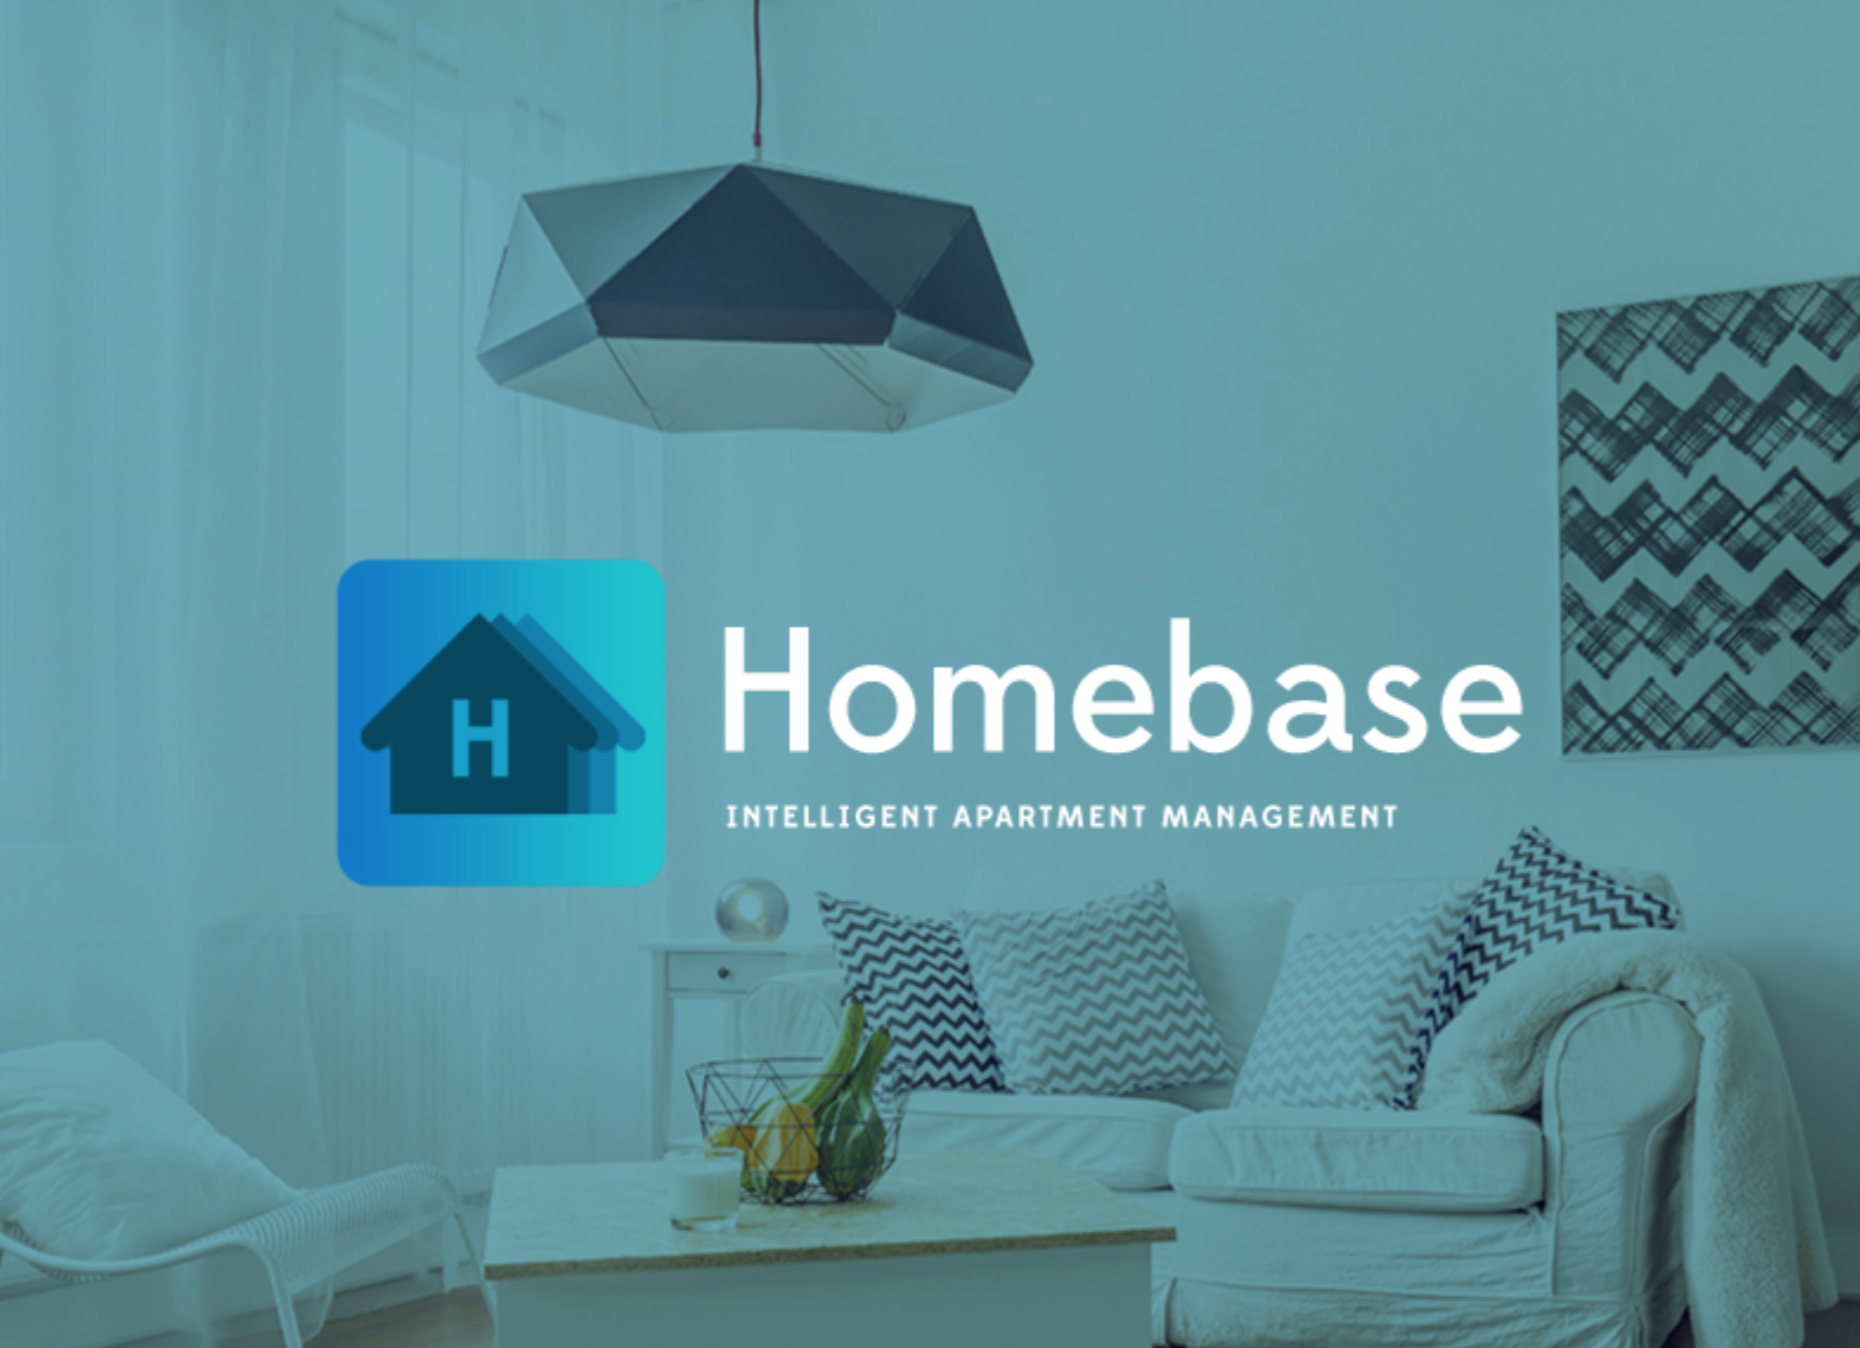 Homebase Presentation Samples